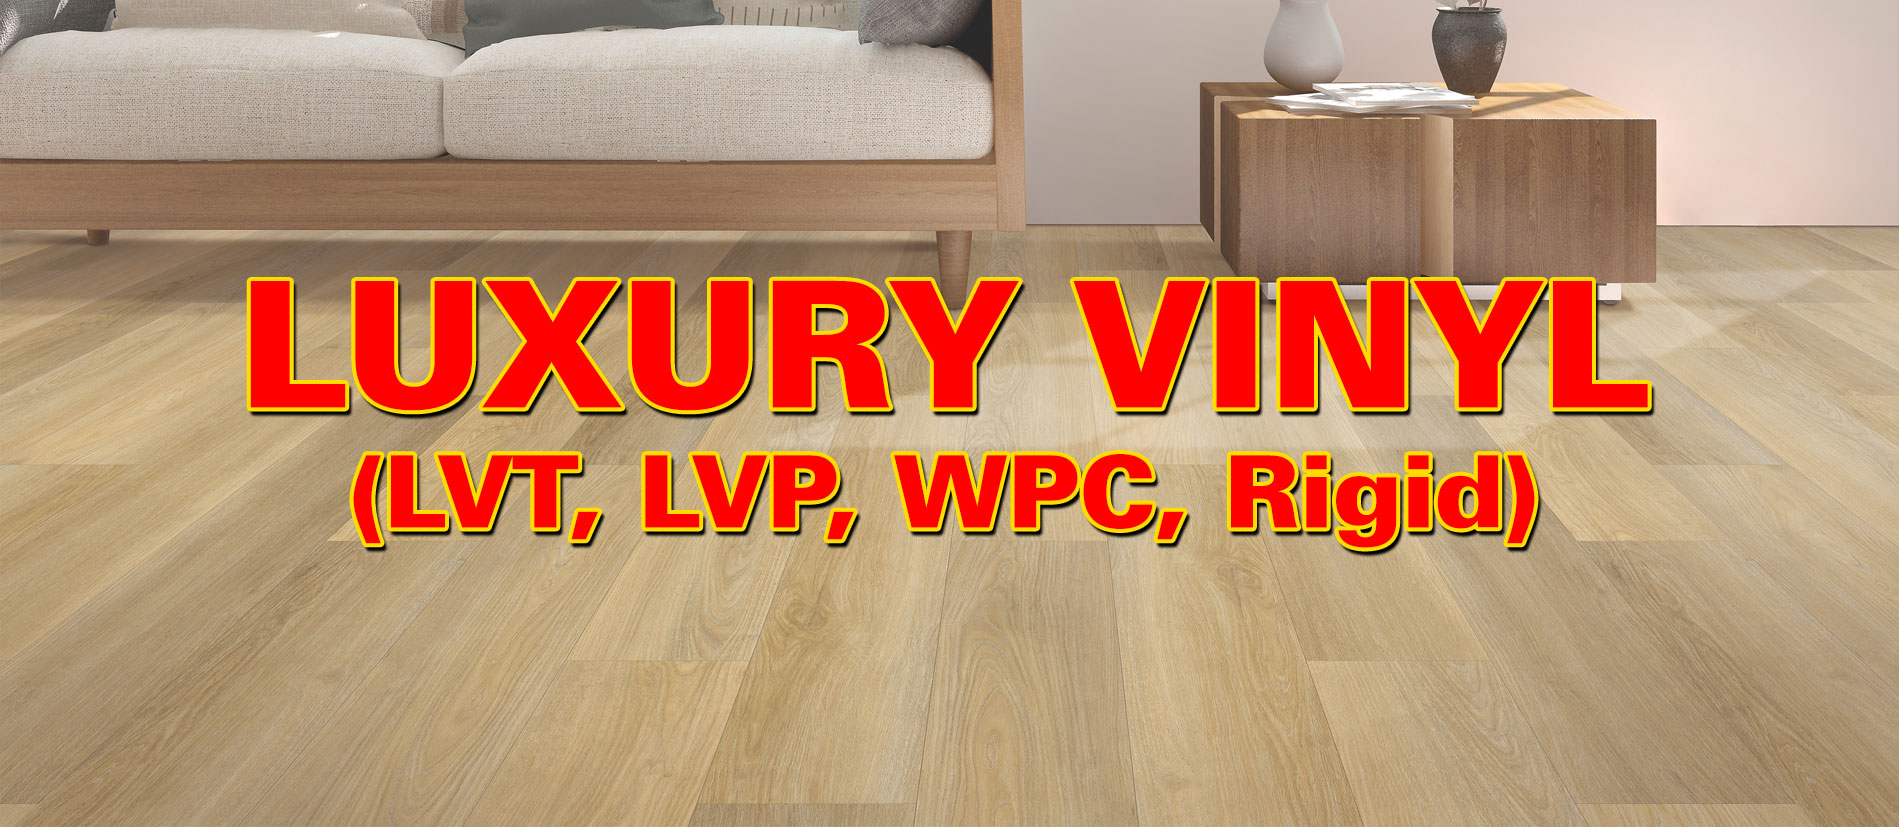 Luxury Vinyl Flooring